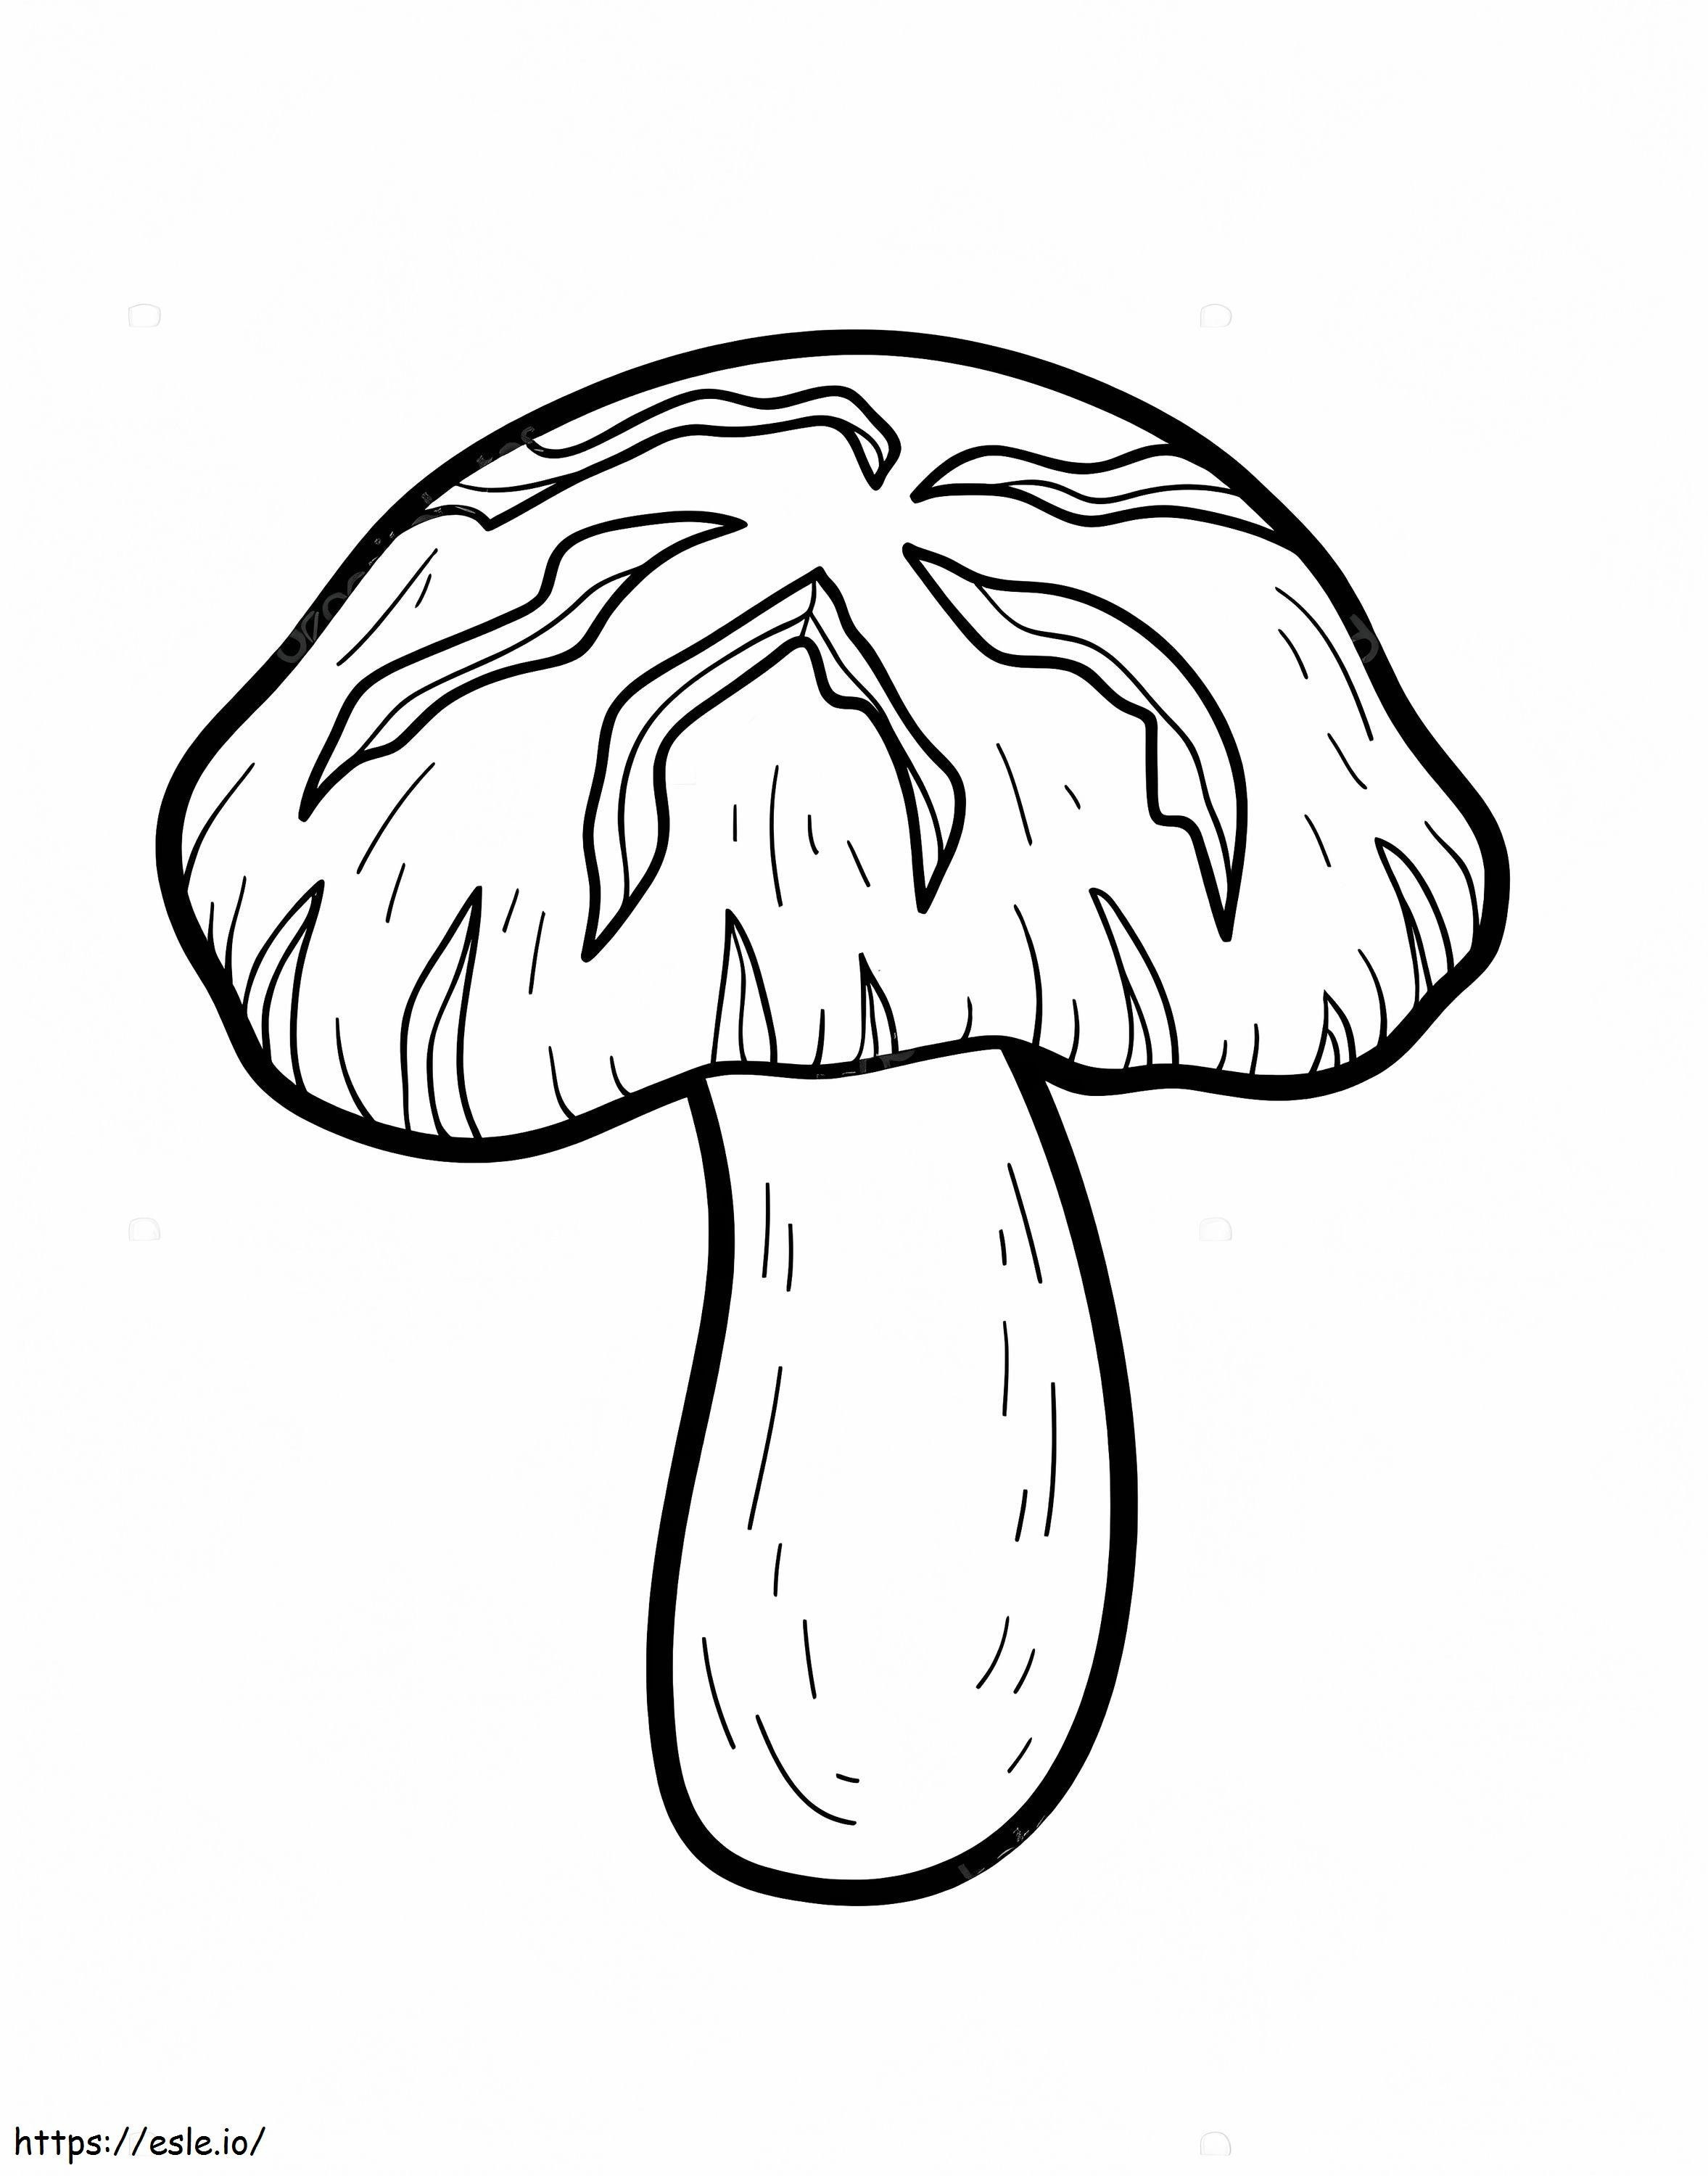 Mushroom 1 coloring page